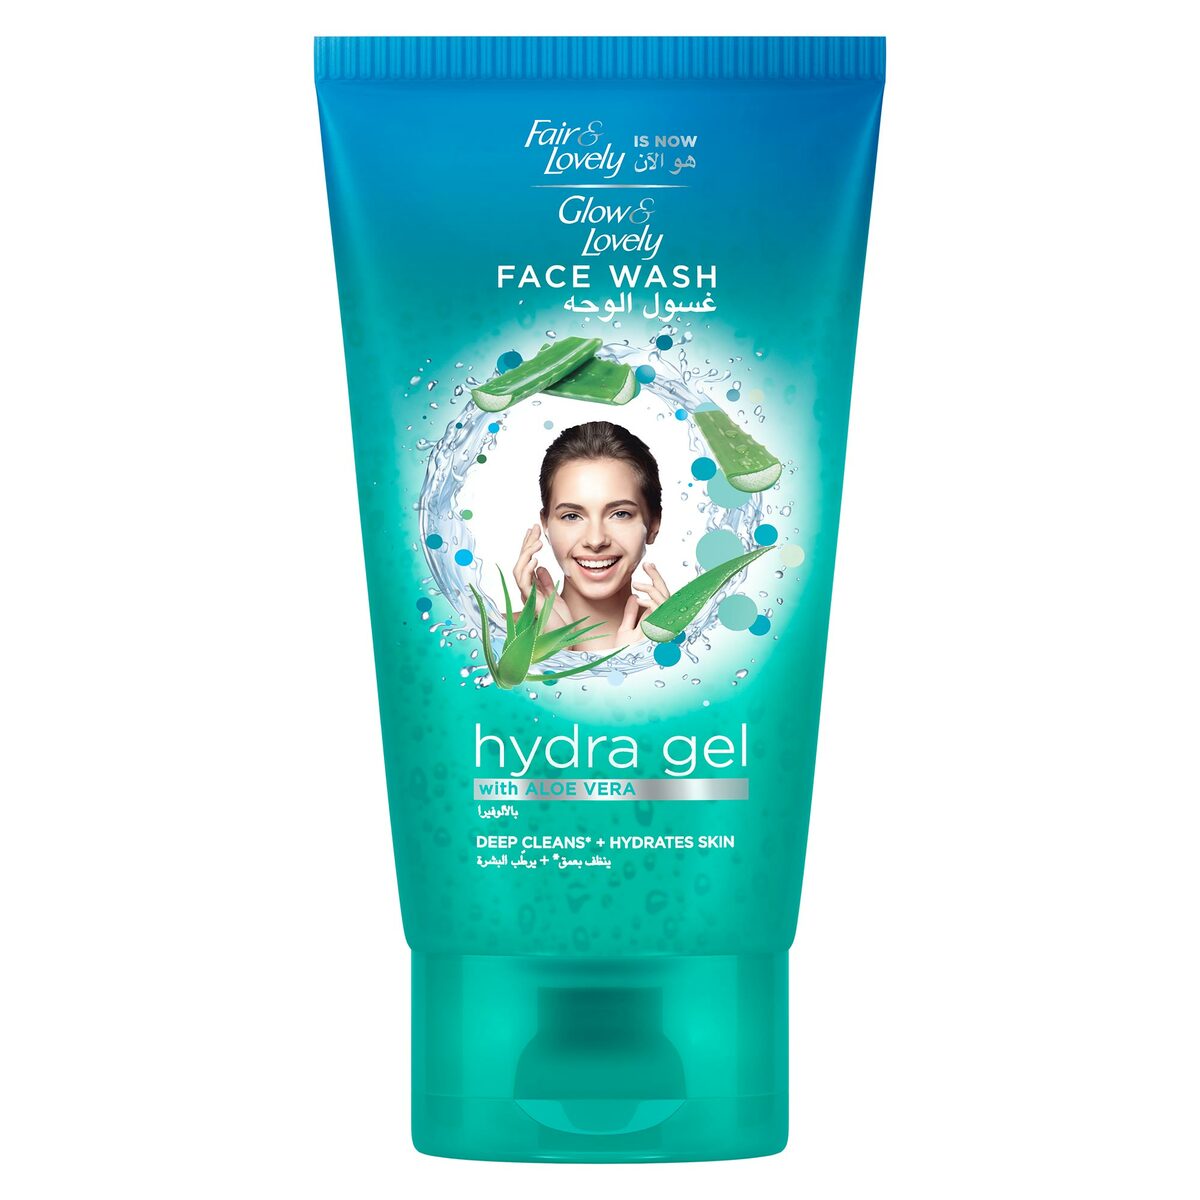 Glow & Lovely Face Wash Hydra Gel 150g